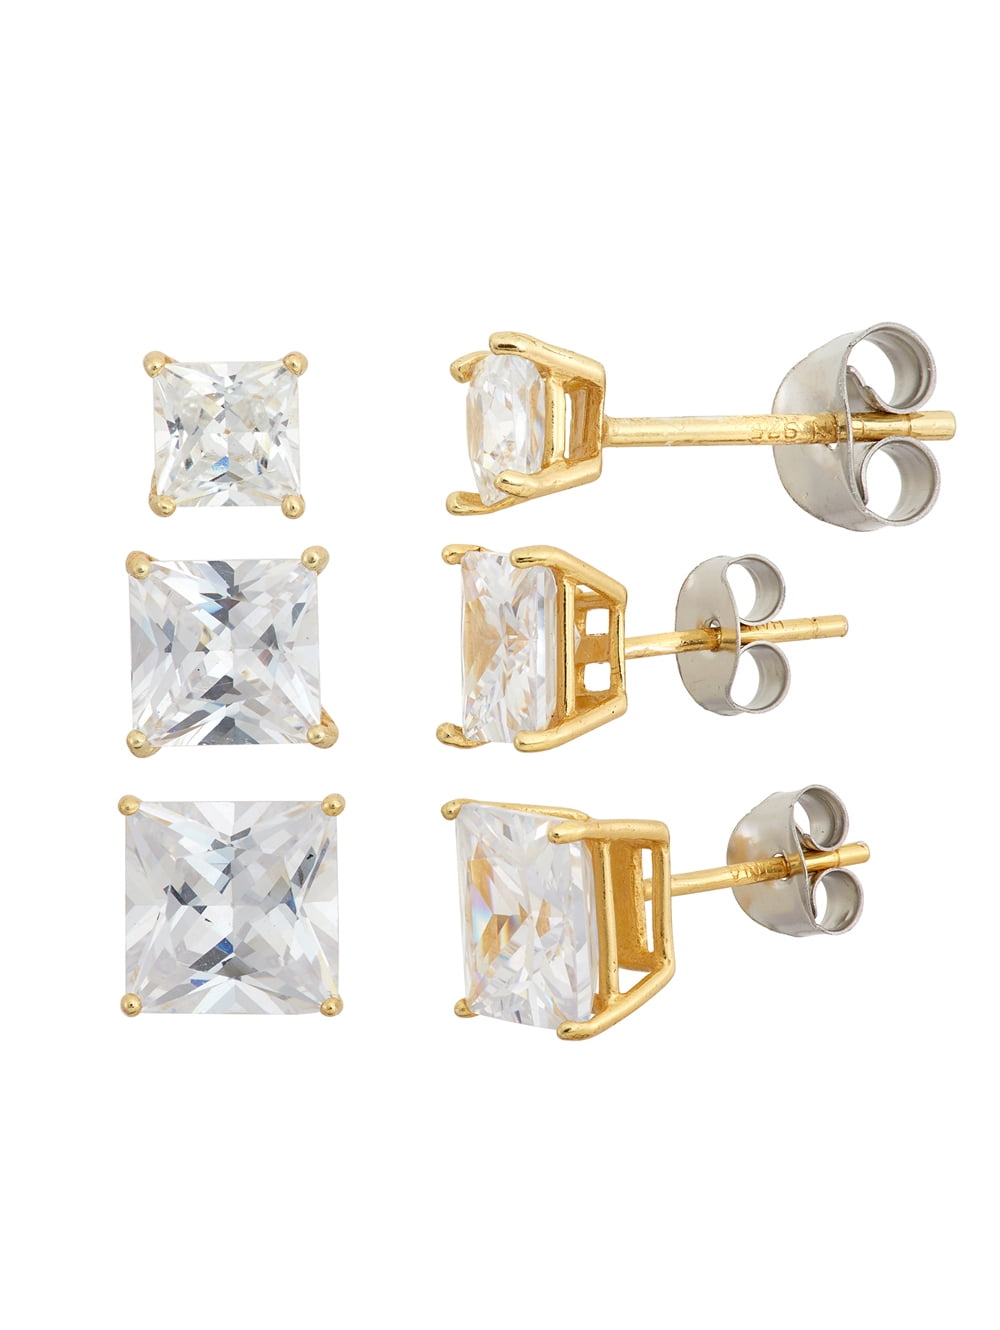 Two Pair Silver CZ Crystal Round Stud Earrings Women Girls Dress Jewelry 6mm 4mm 